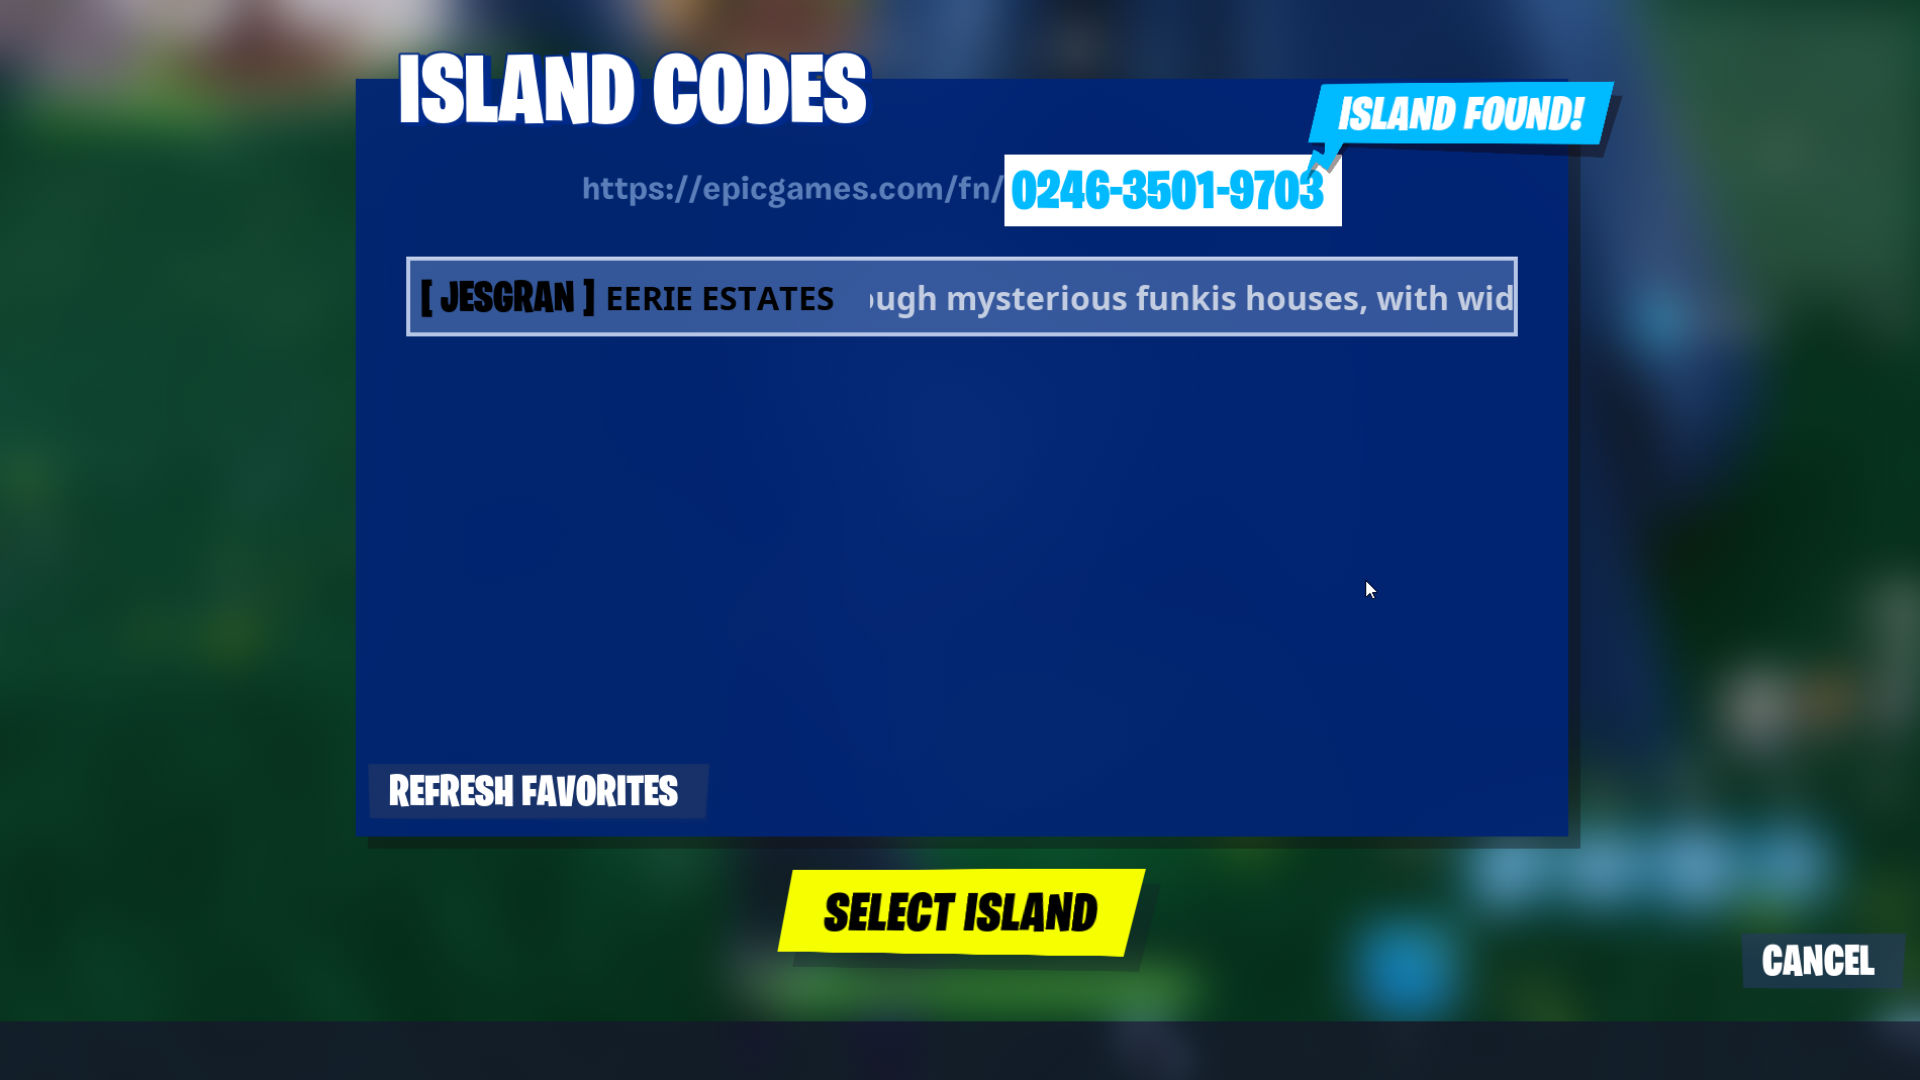 Fortnite Creative Island Codes List and Awesome Creations - Fortnite Guide  - IGN